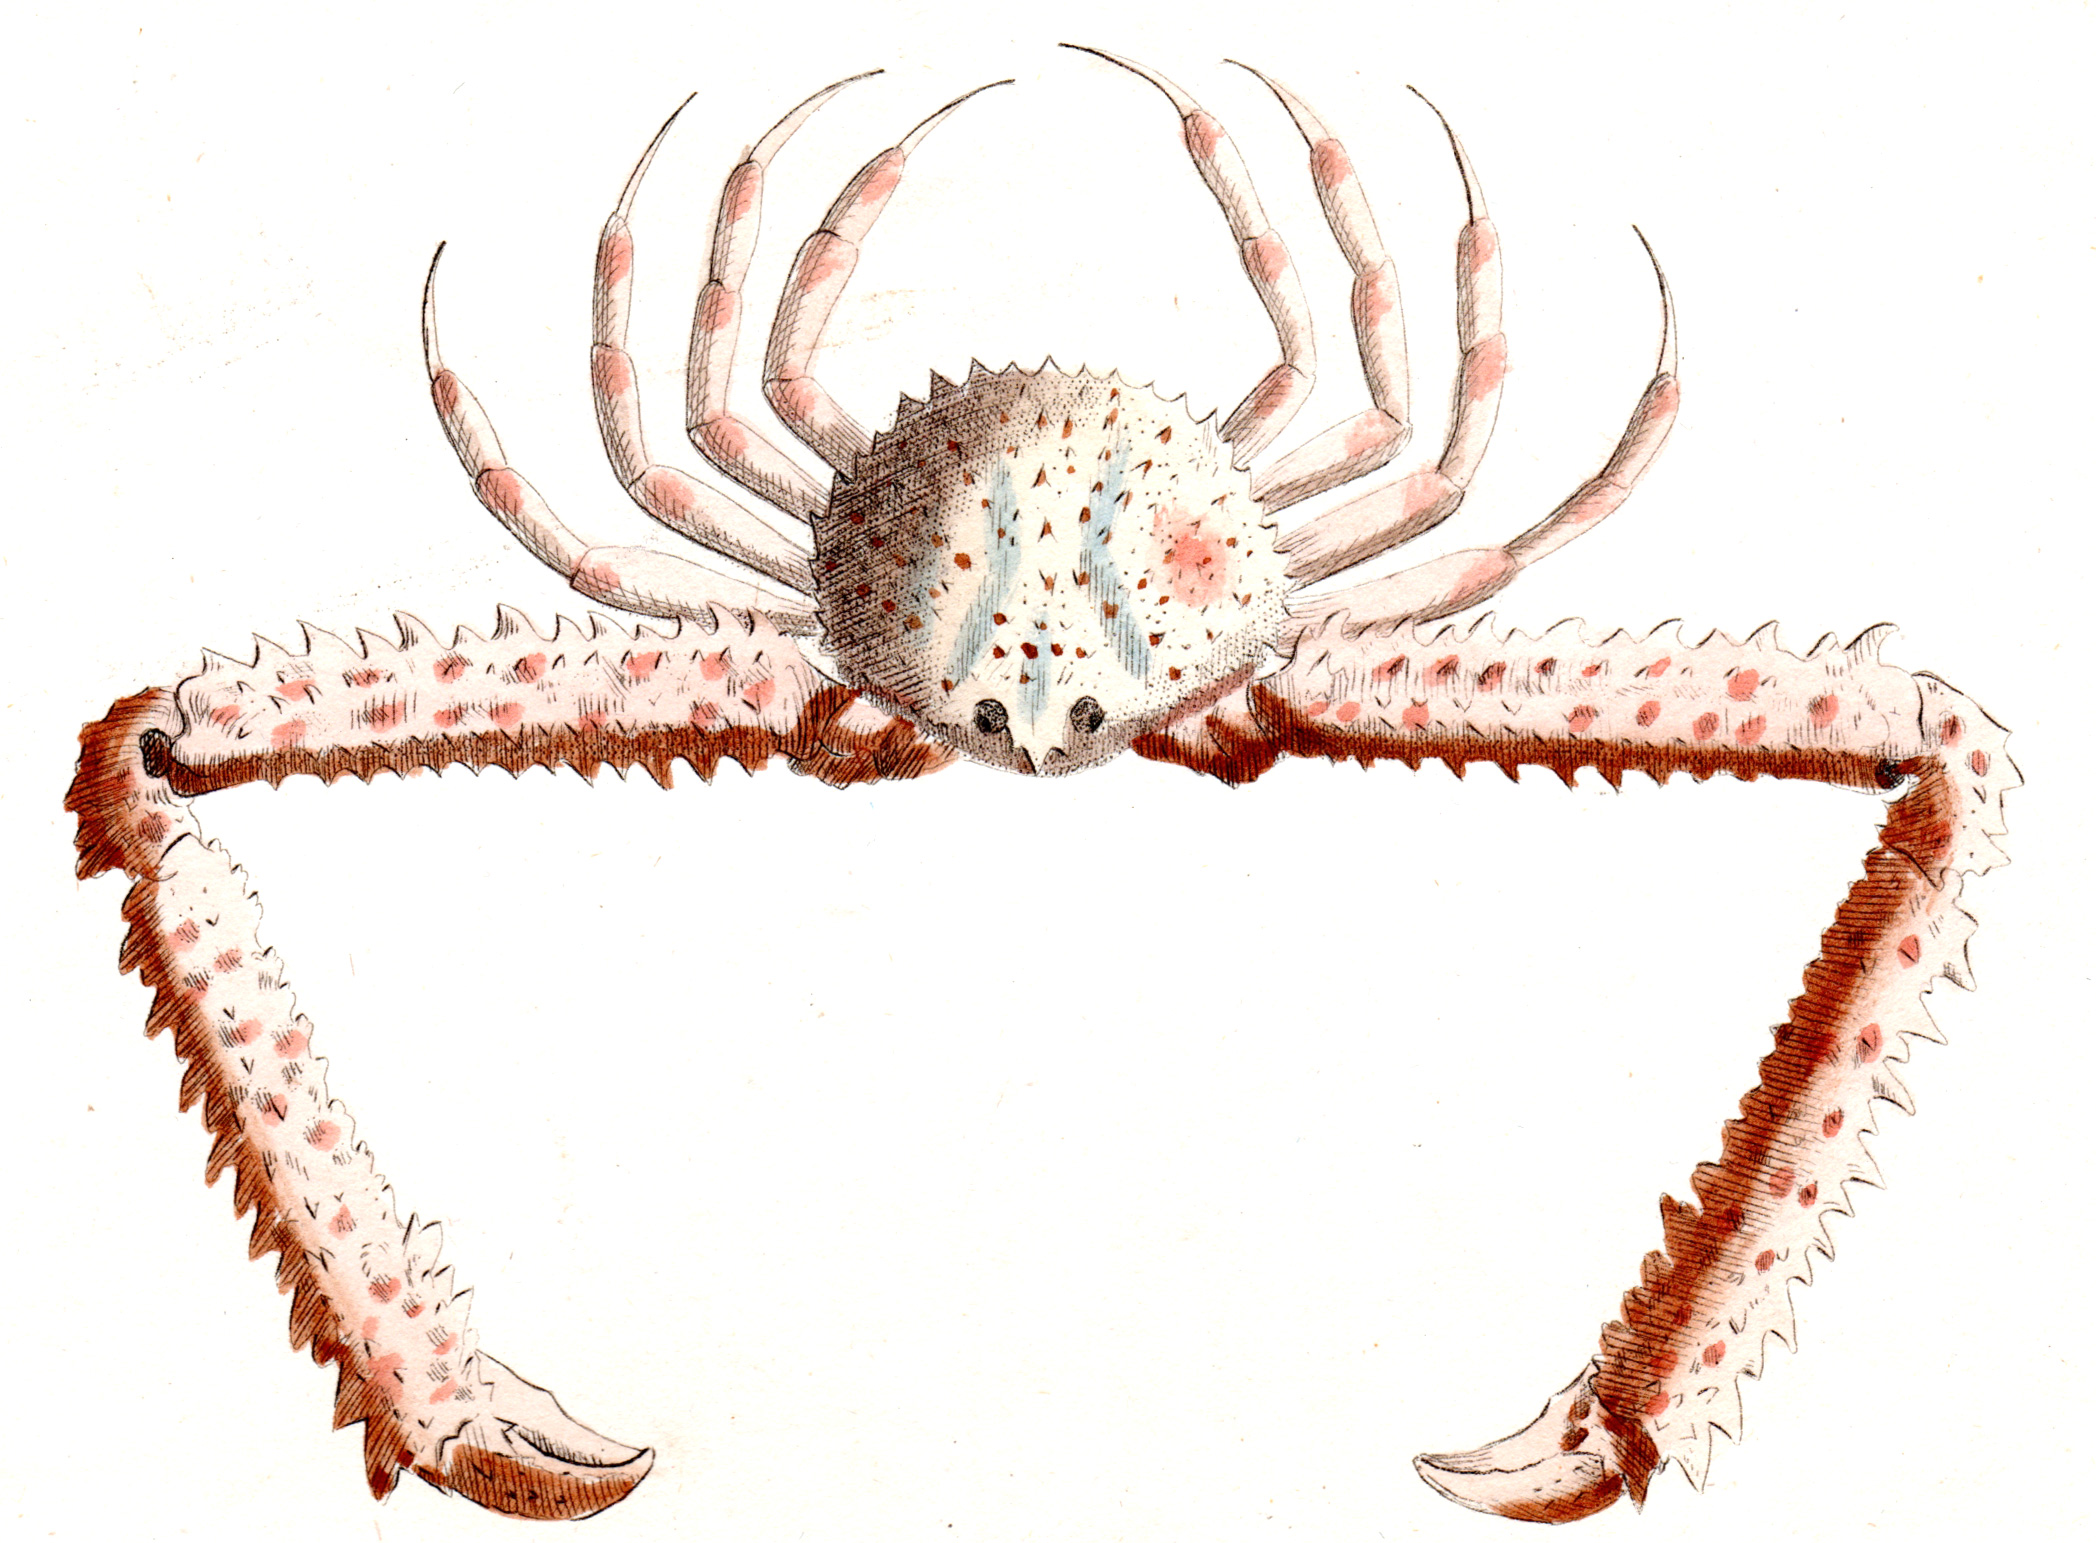 Shaw, George / Nodder, Frederick & Robert P. – Crabs, Shrimp, Lobsters, etc.